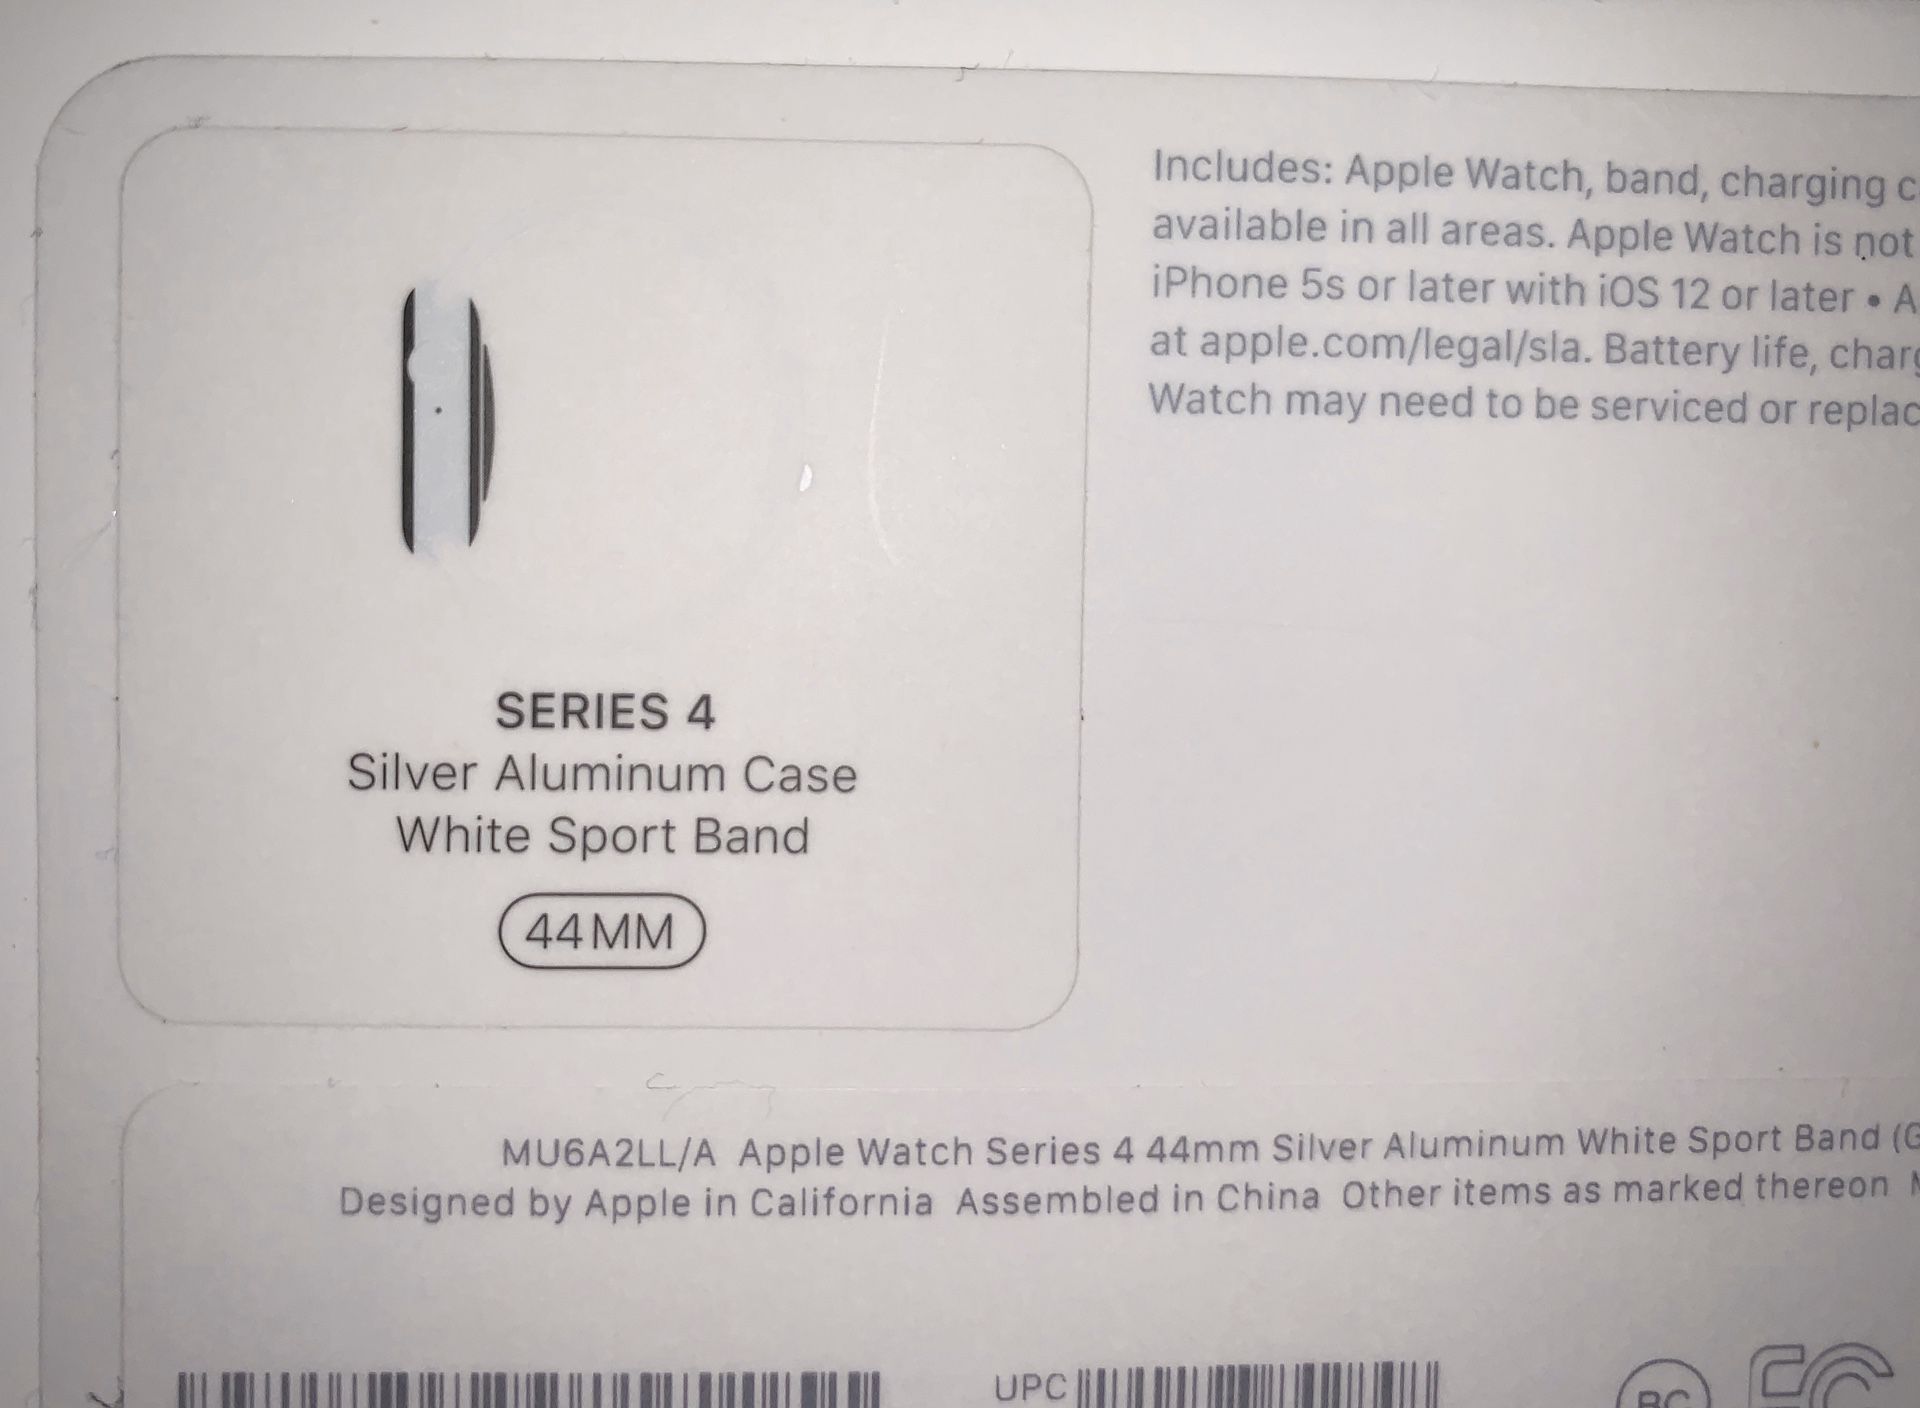 Apple Watch series 4 Silver Aluminum Case